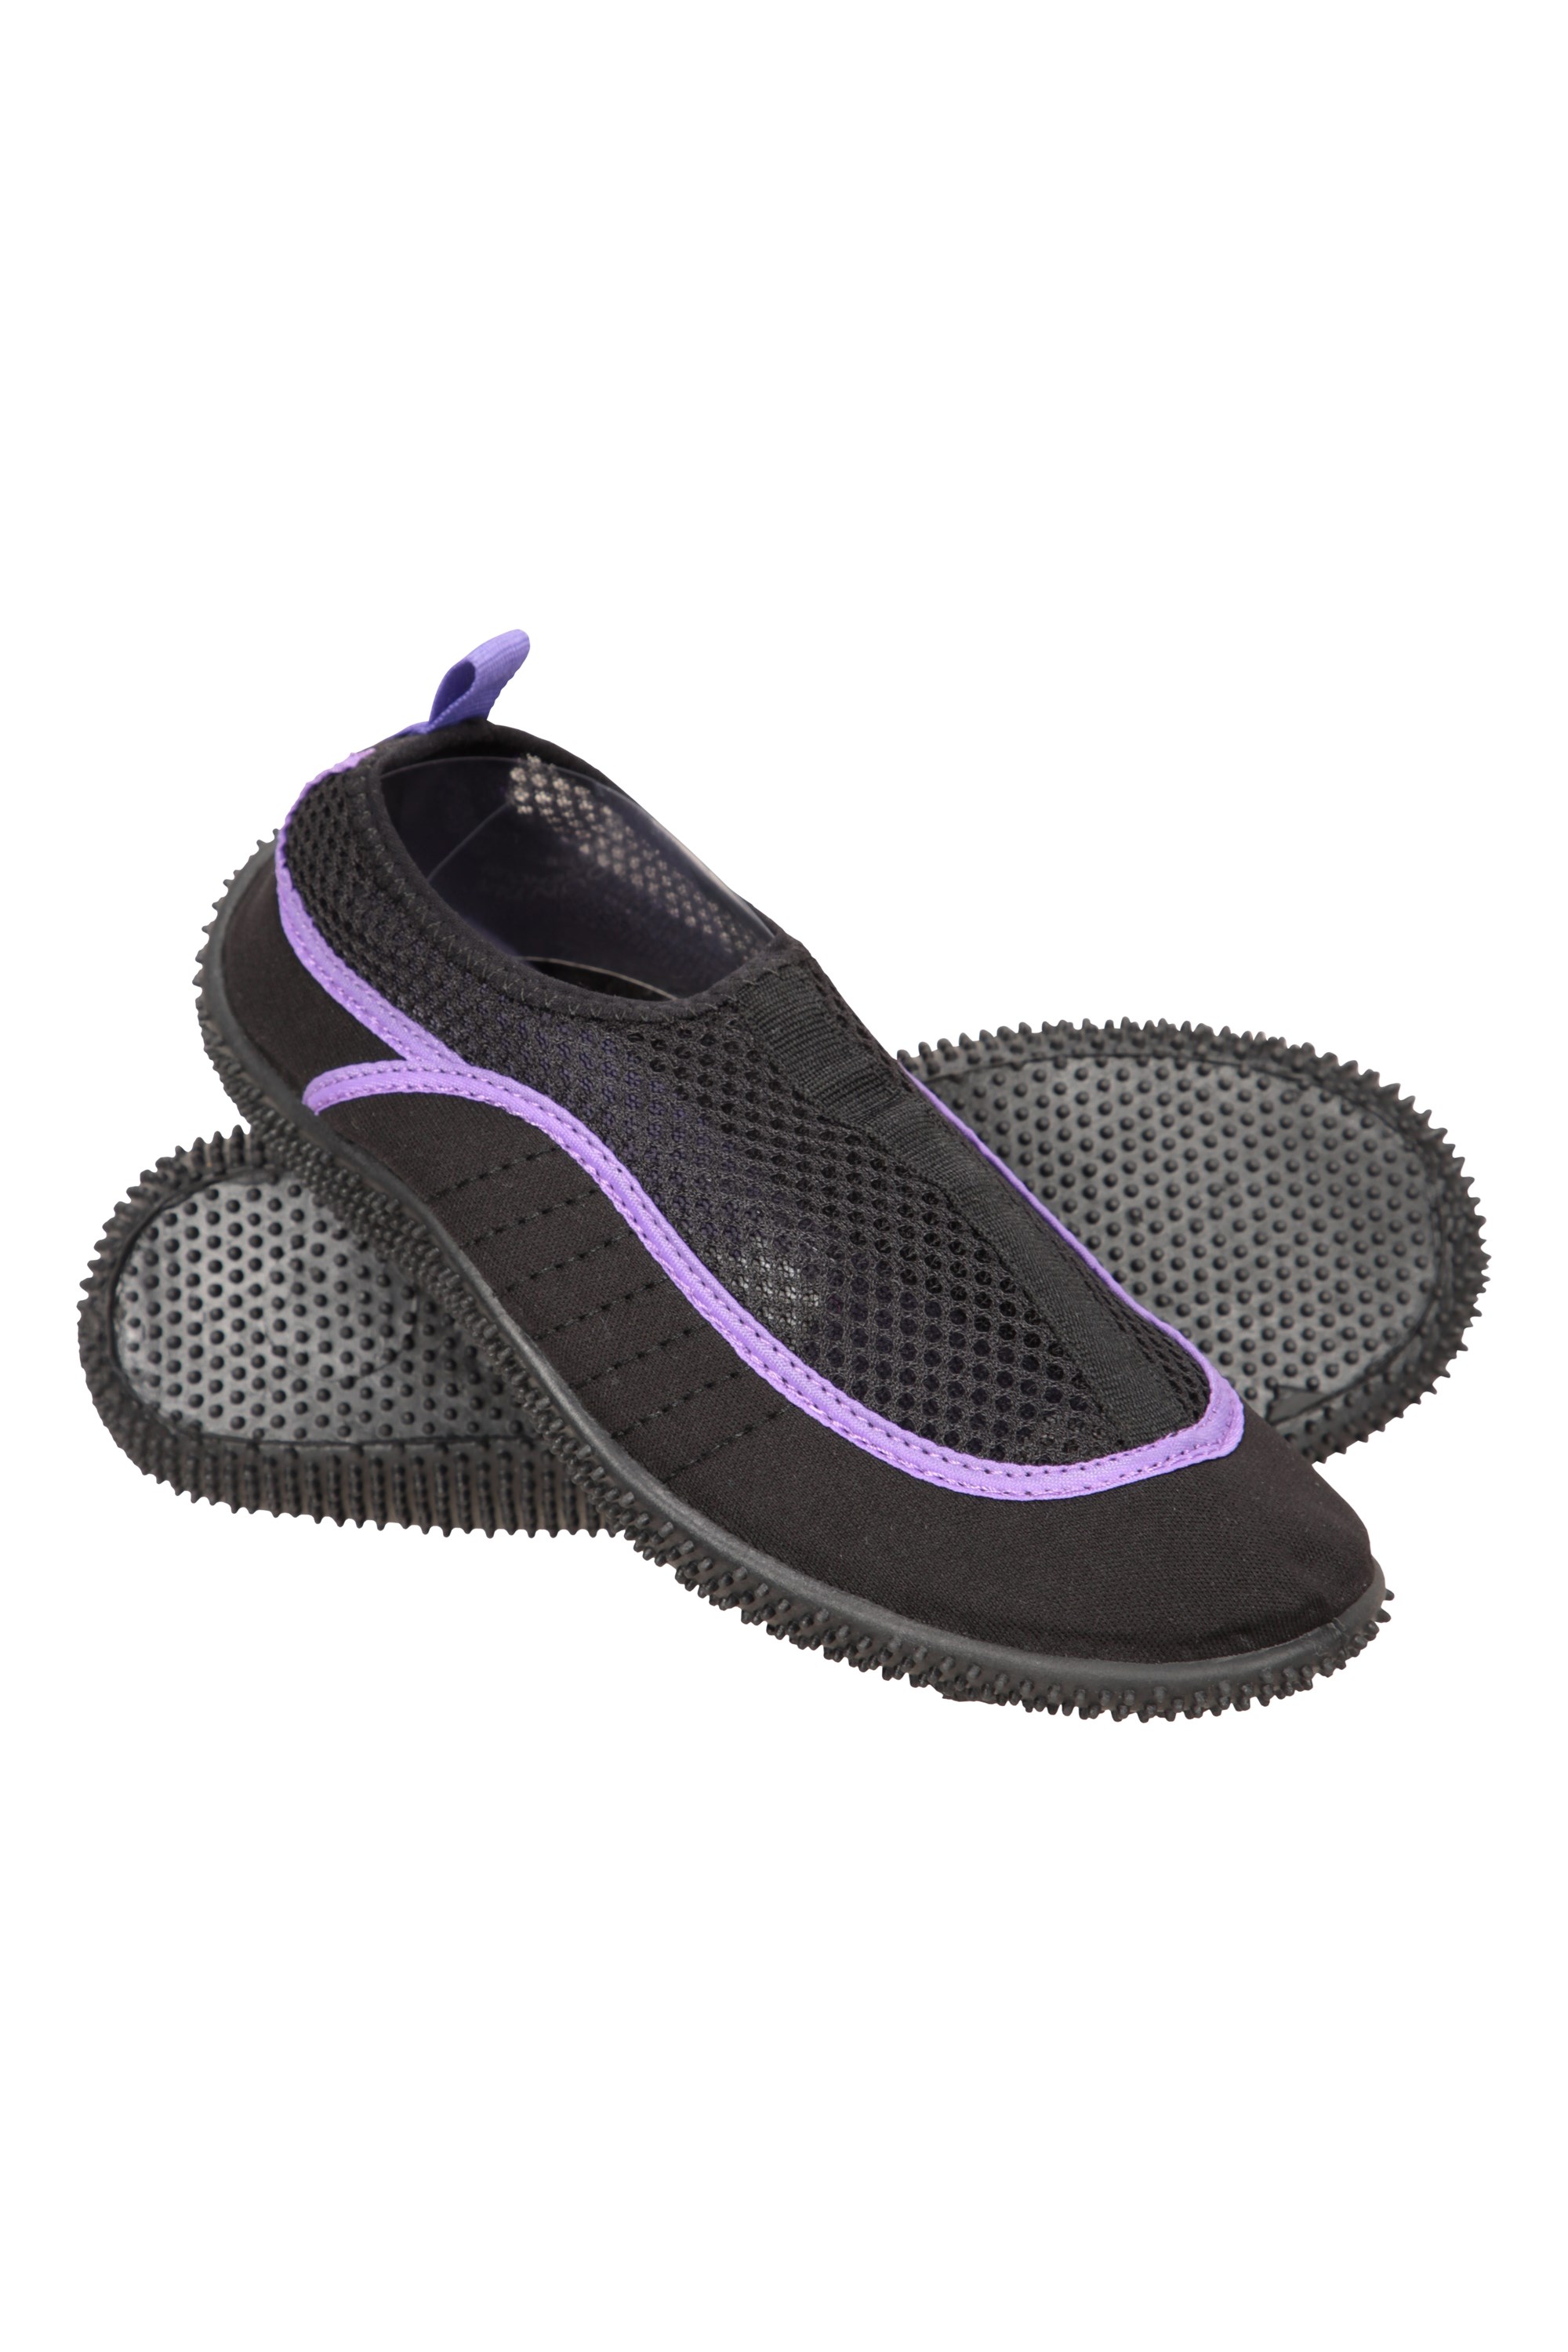 Easy Slip On Summer Wet Shoes Lightweight Kids Swim Shoes Neoprene Water Shoes for Walking Underwater Mesh Panel Mountain Warehouse Bermuda Junior Aqua Shoes 